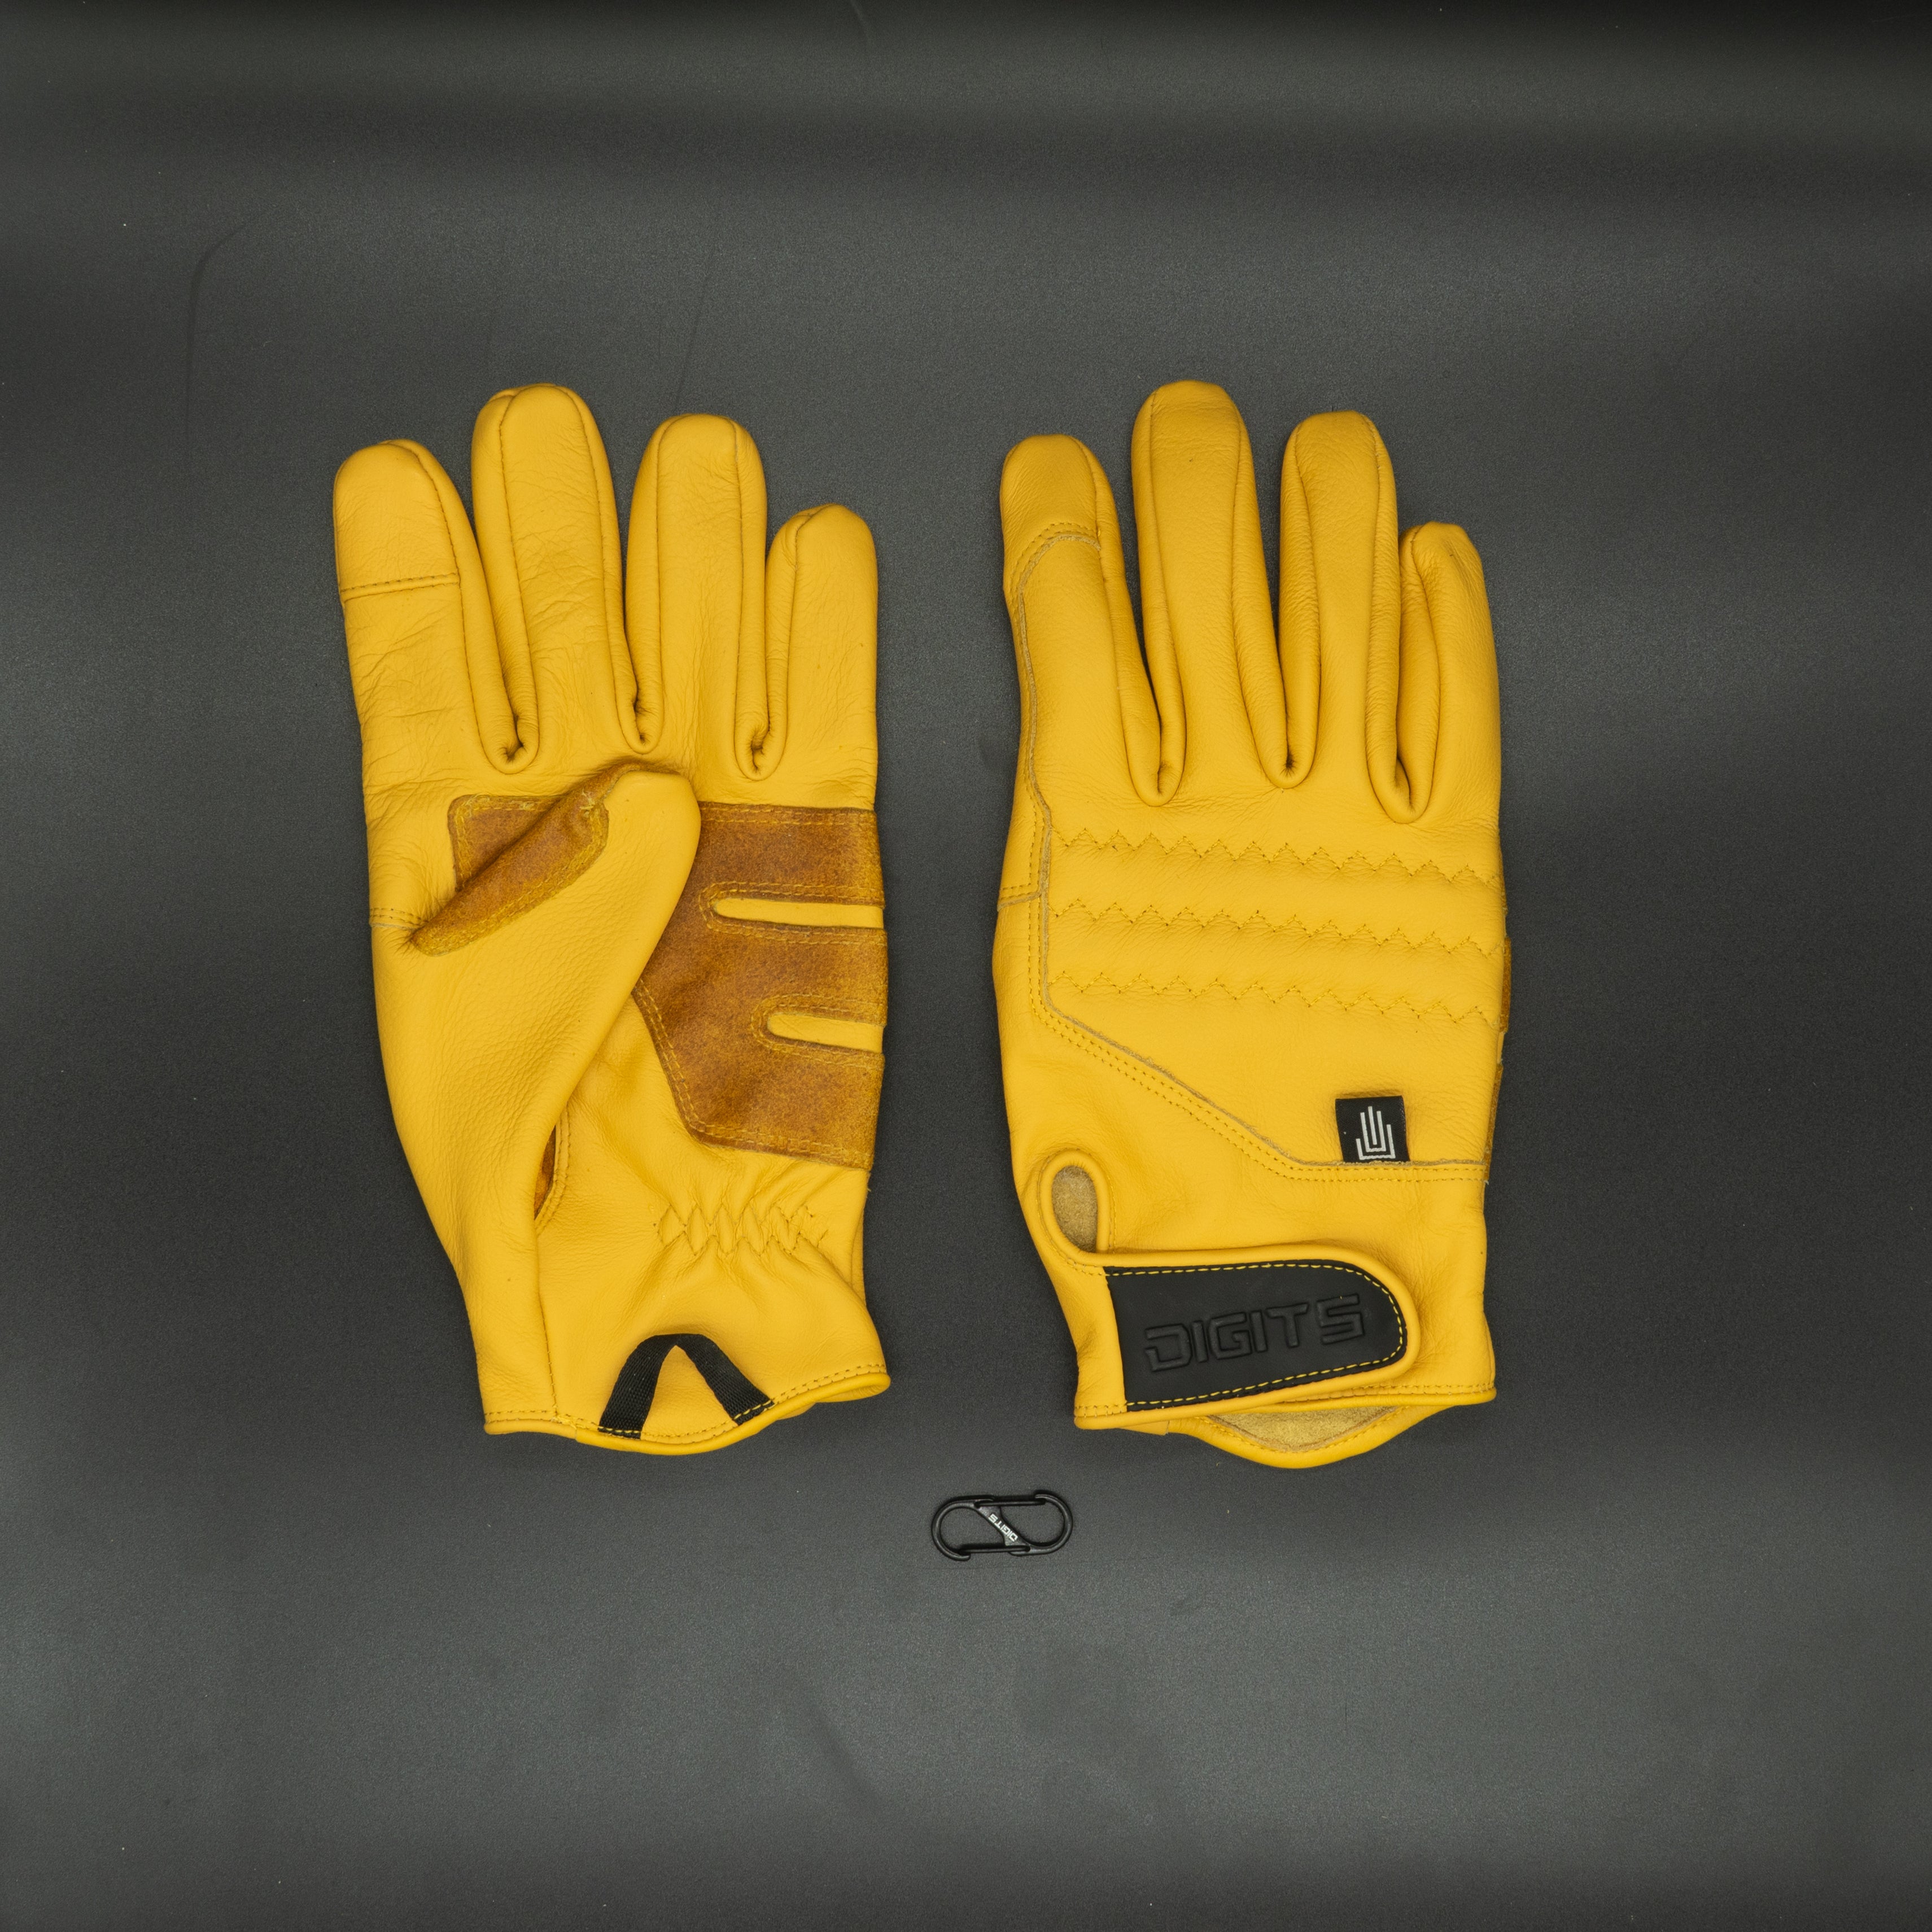 Digits Workwear Leather Work Gloves | Best Cowhide Heavy Duty Glove